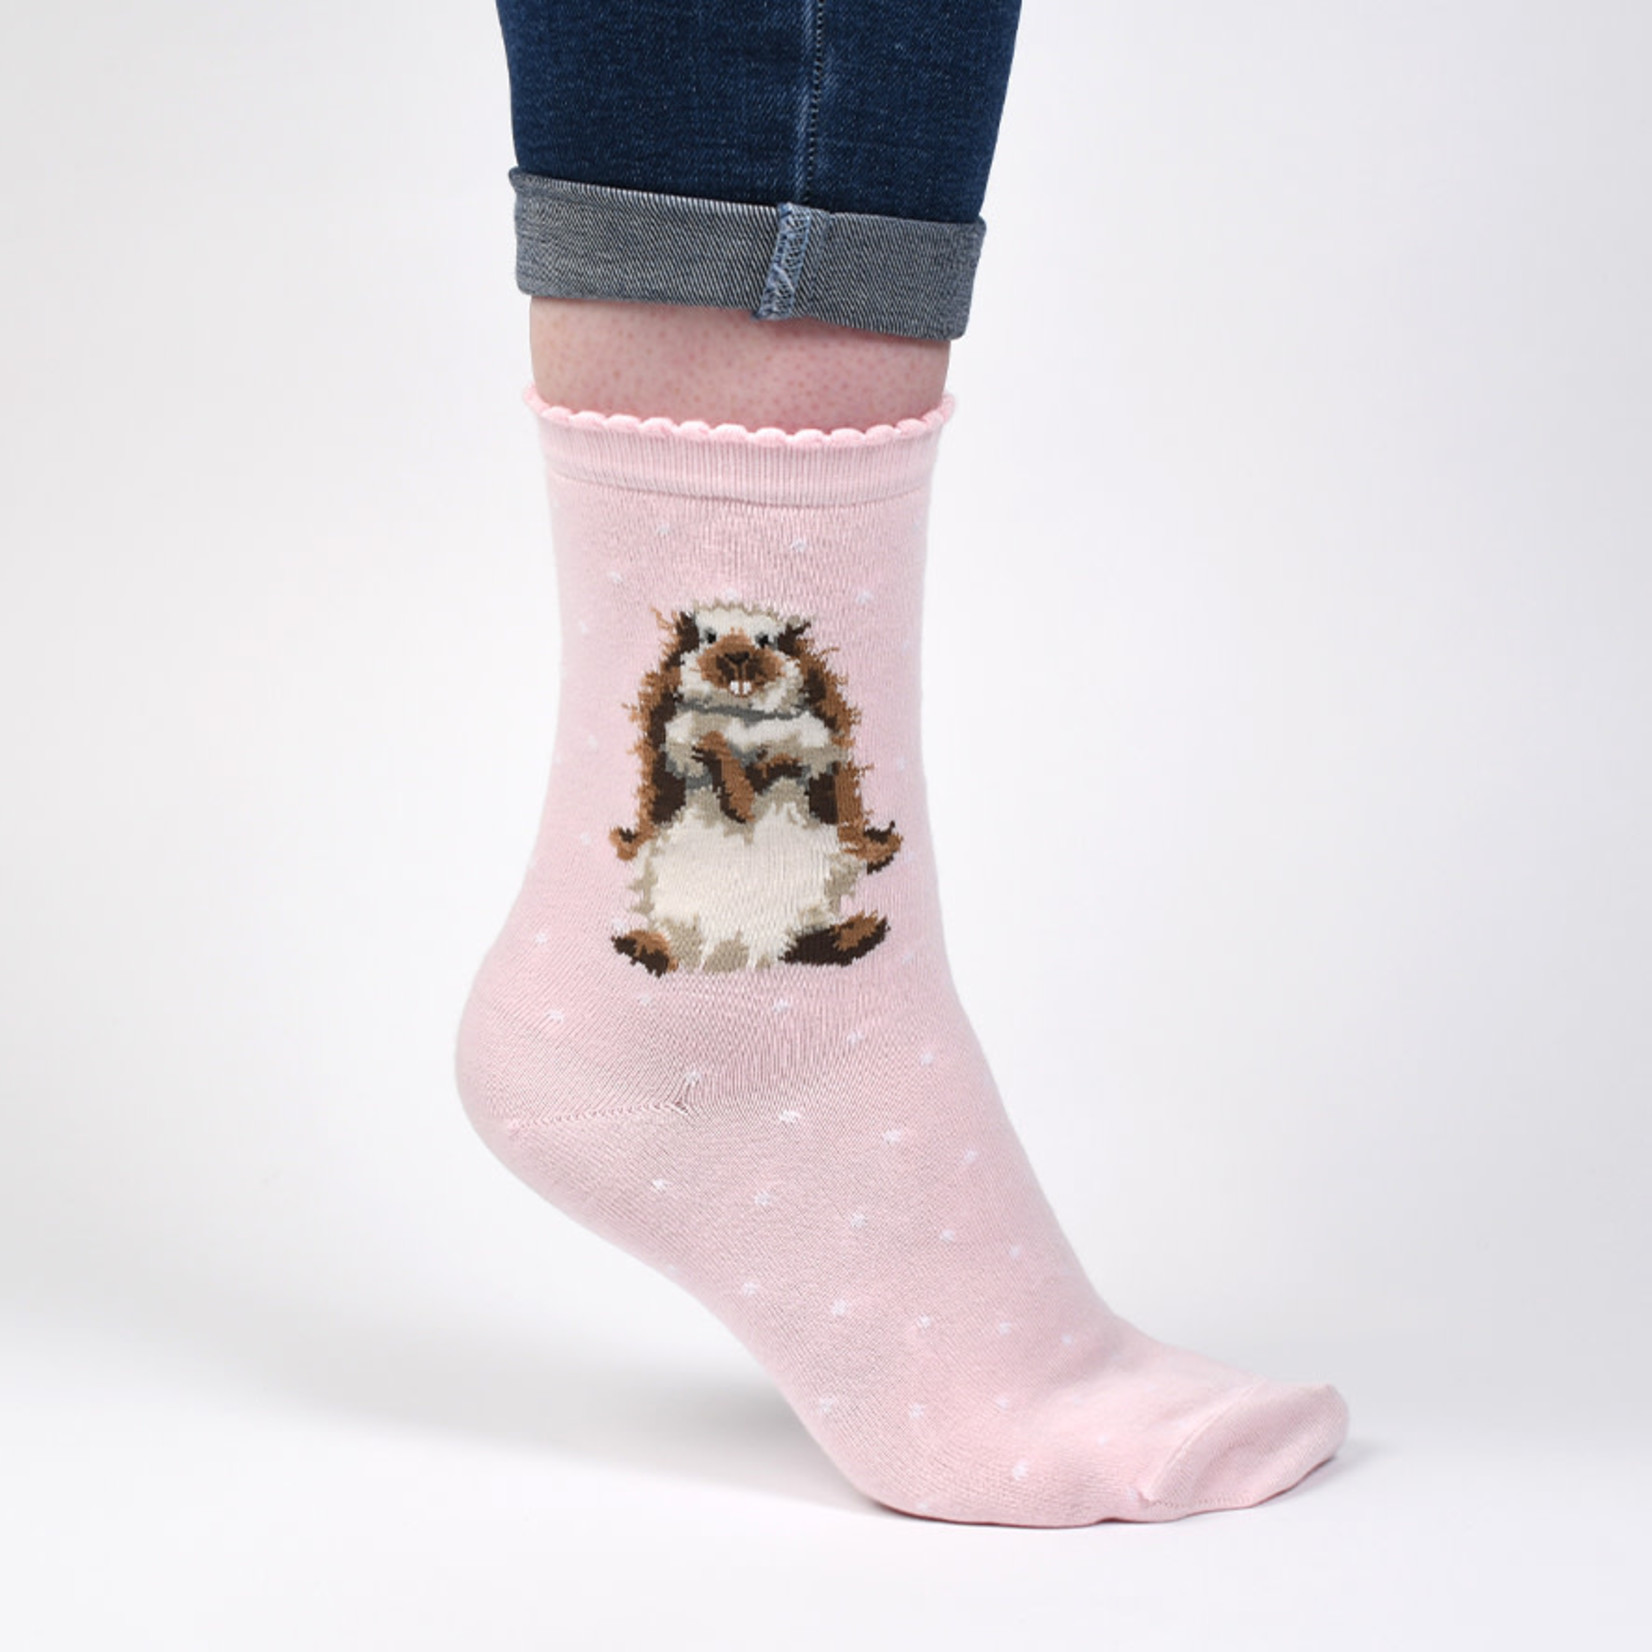 Wrendale Designs Socks - 'Earisistible' Rabbit (SOCK001)